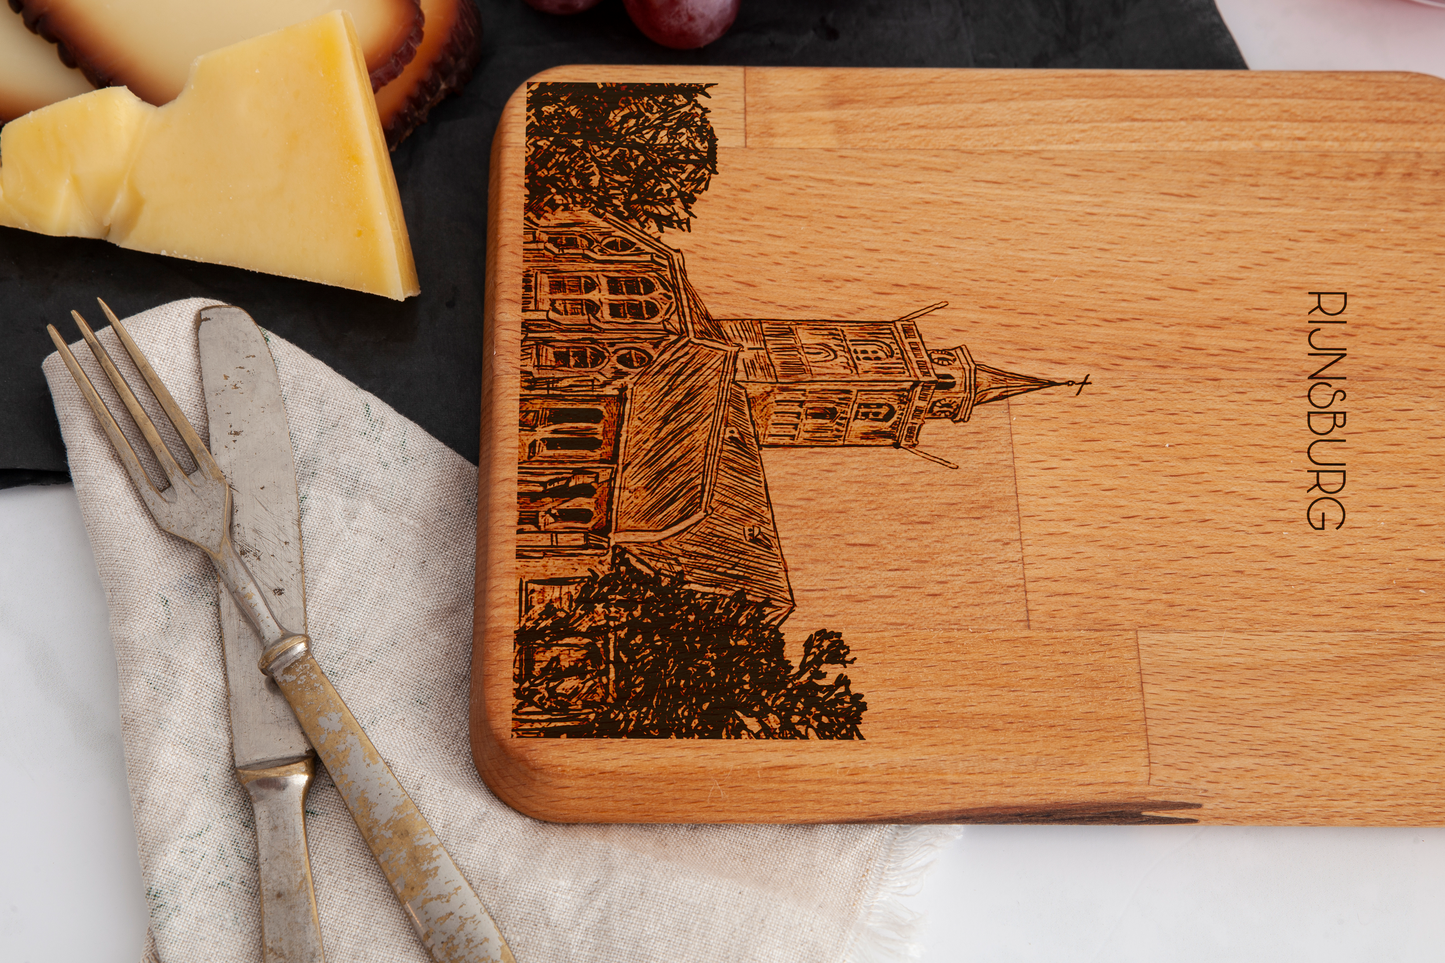 Rijnsburg, Grote Kerk, cheese board, wood grain